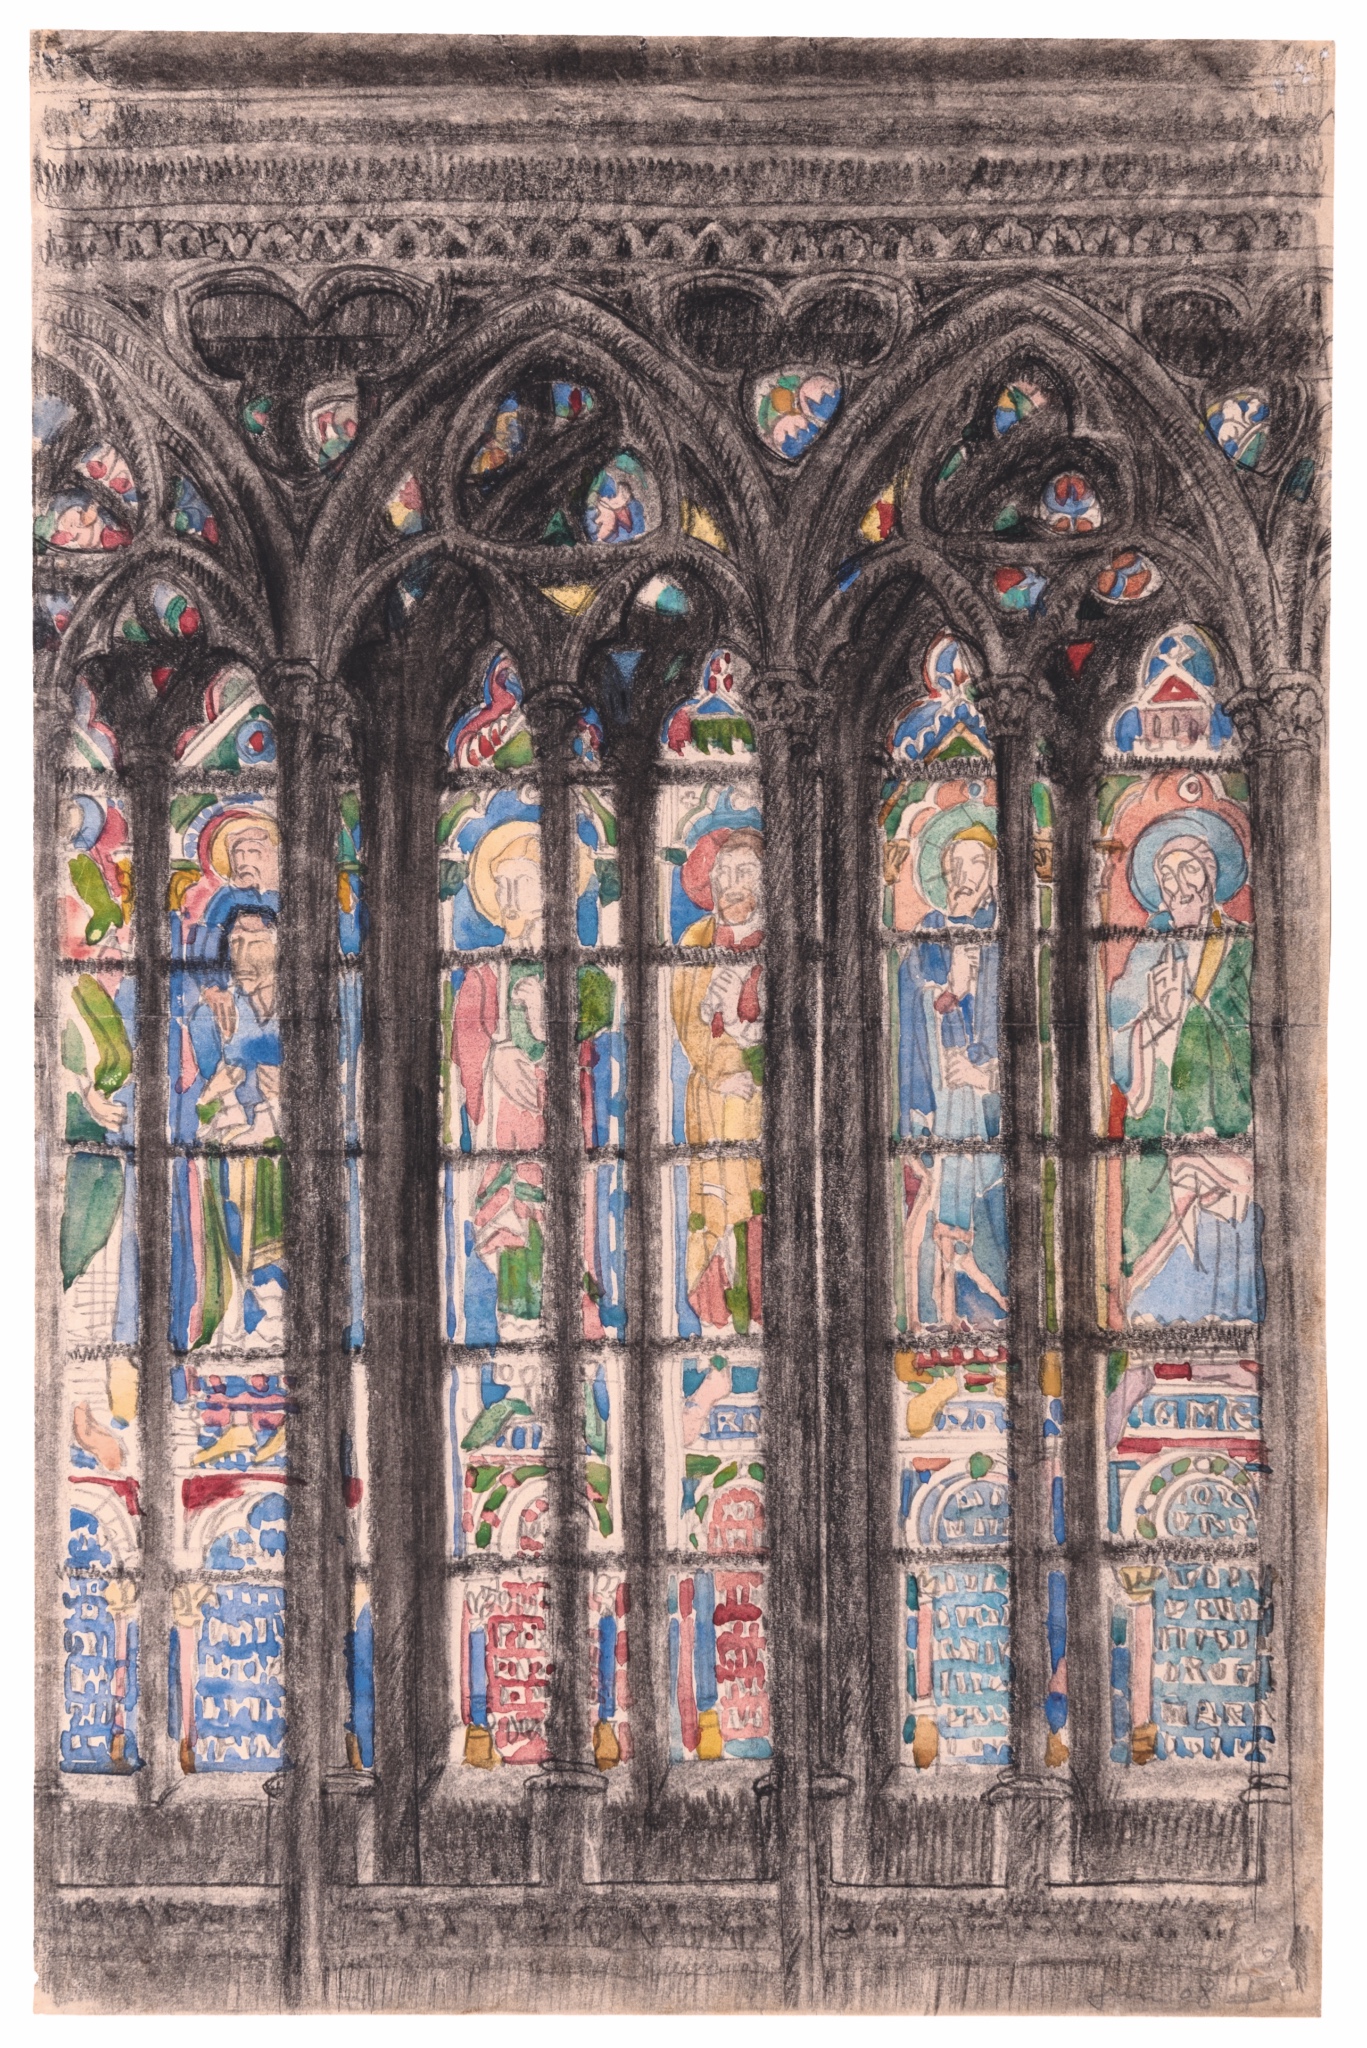 Le Corbusier, “Notre-Dame de Paris, finestra superiore” (1908)